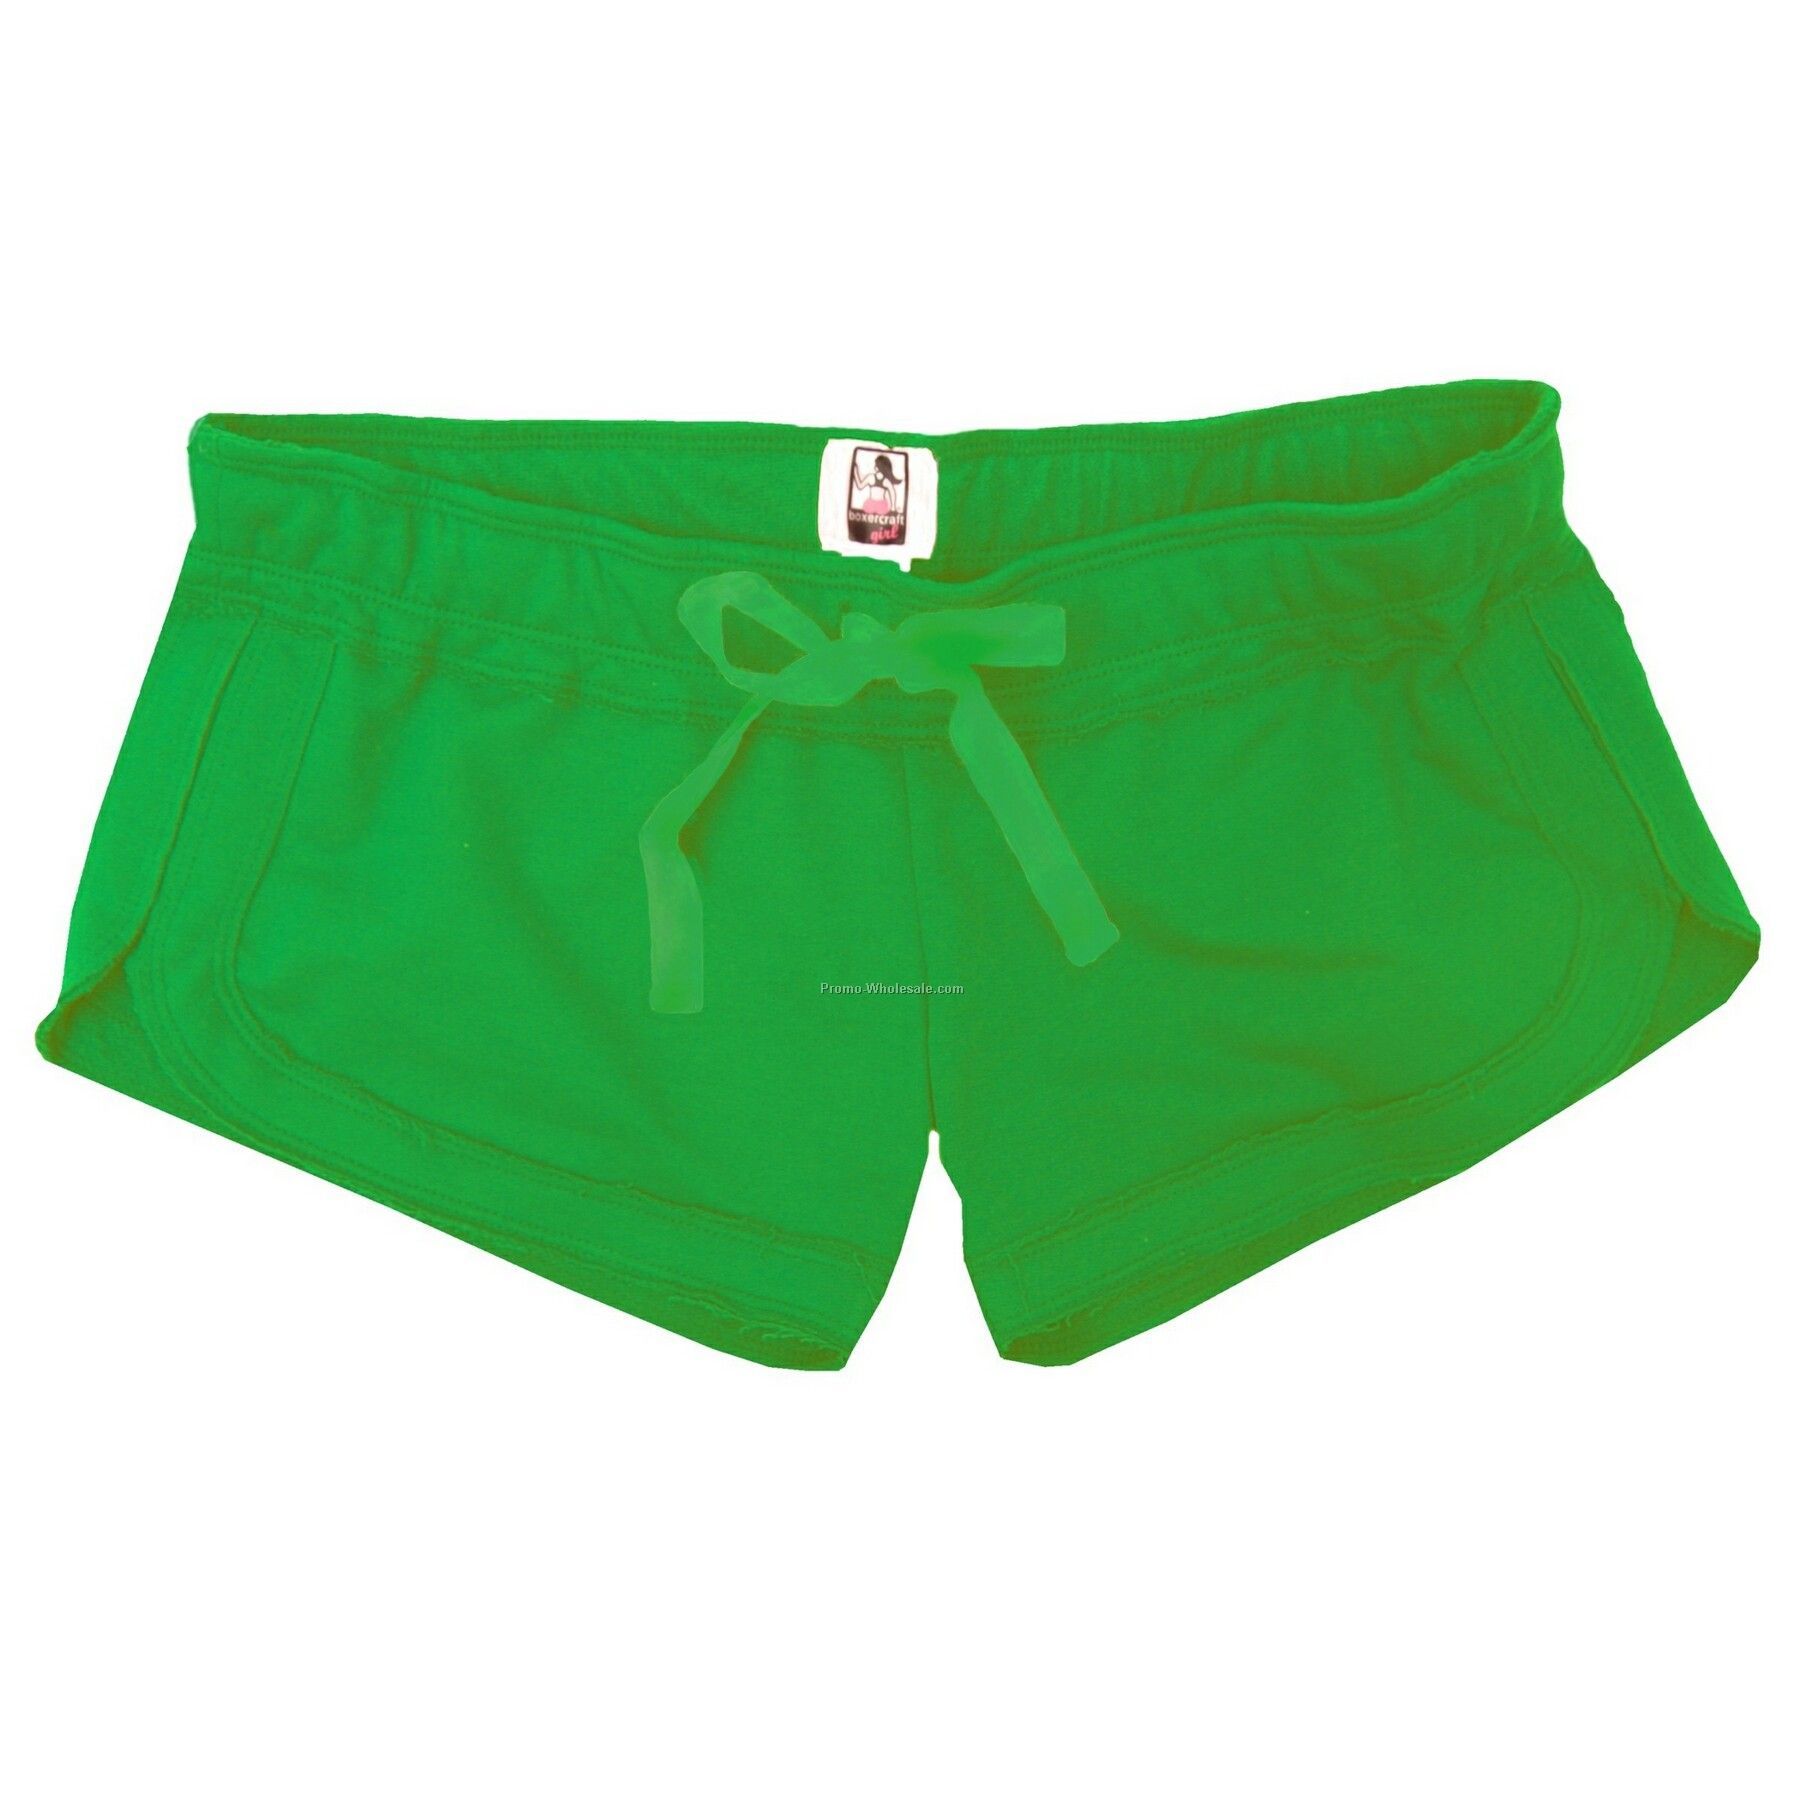 Adults' Kelly Green Chrissy Shorts (Xs-xl)